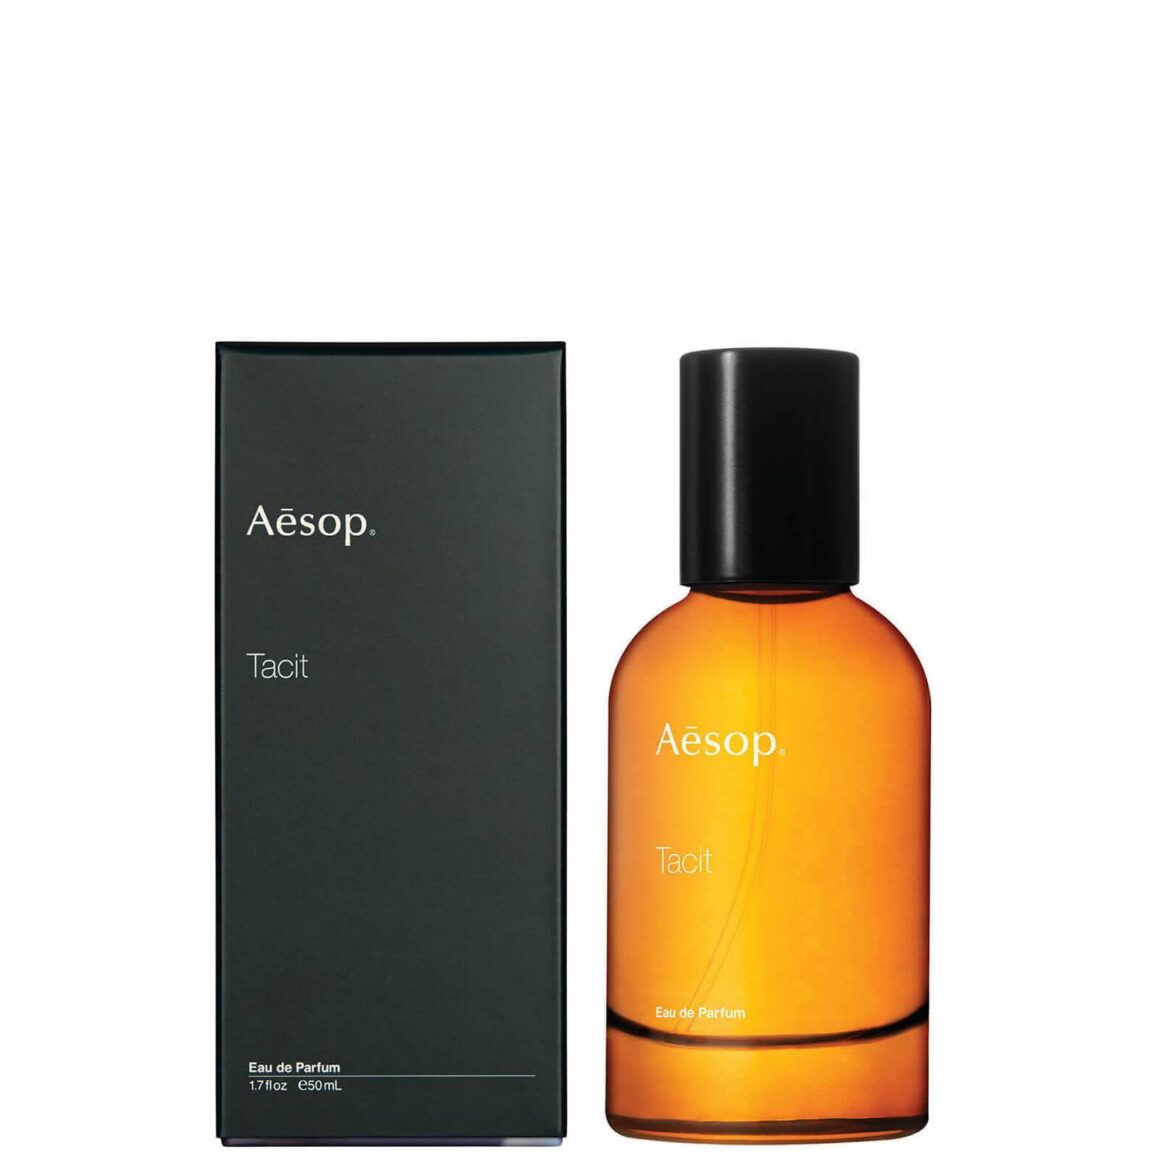 Aesop tacit, men's spring scents